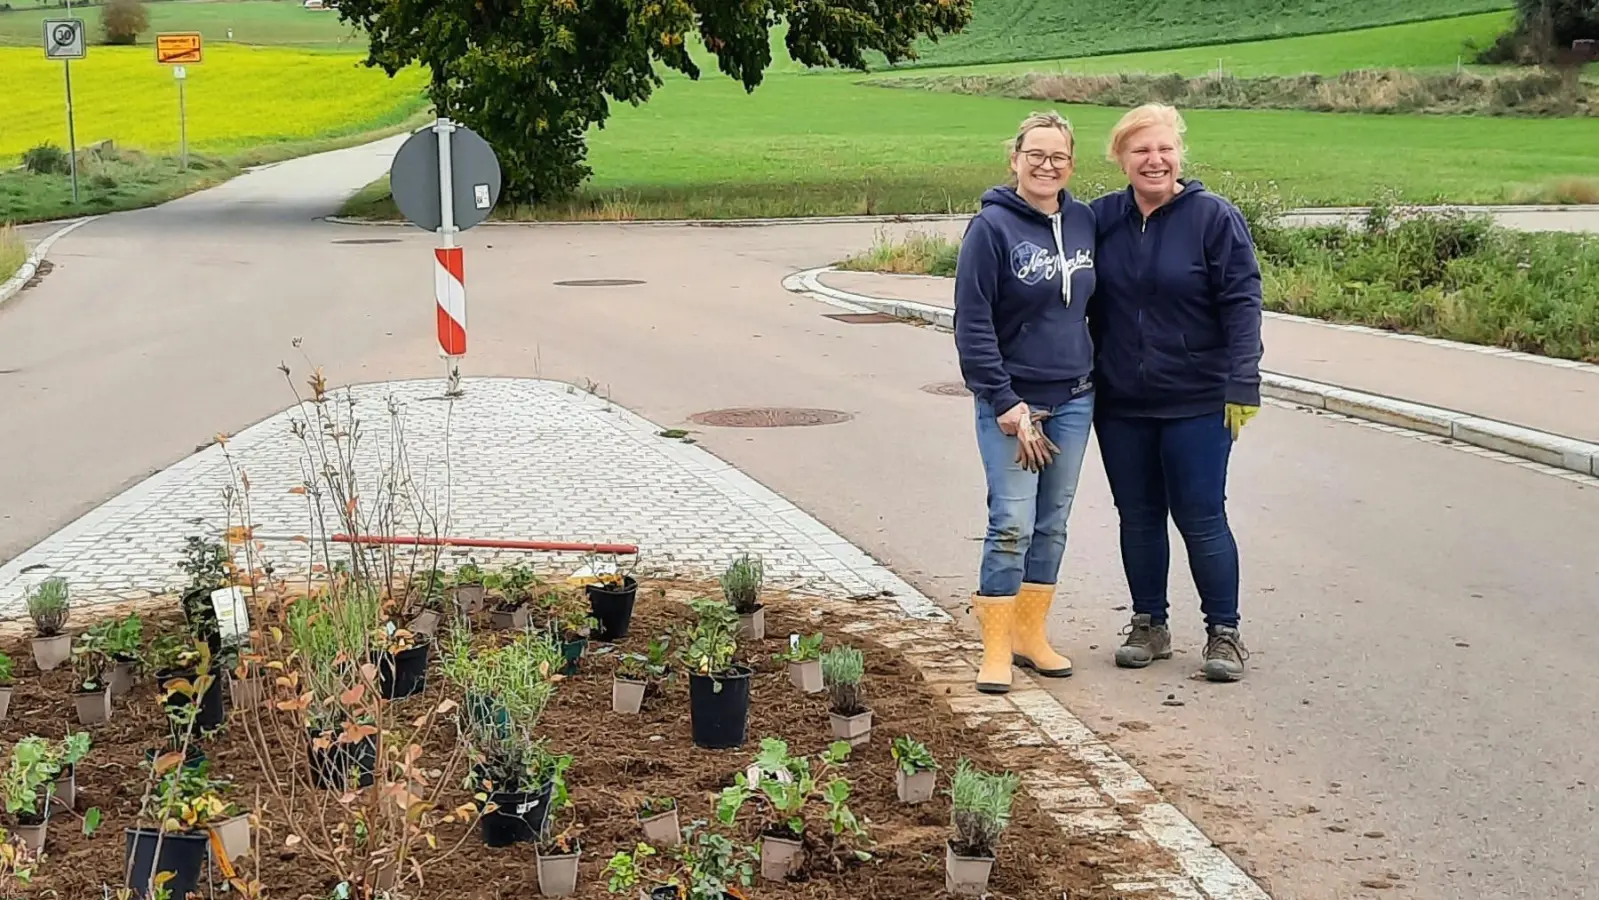 <b>Freiwillige</b> haben in Neukirchen Unmengen an neuem Grün gepflanzt.  (Foto: Josef Abt)